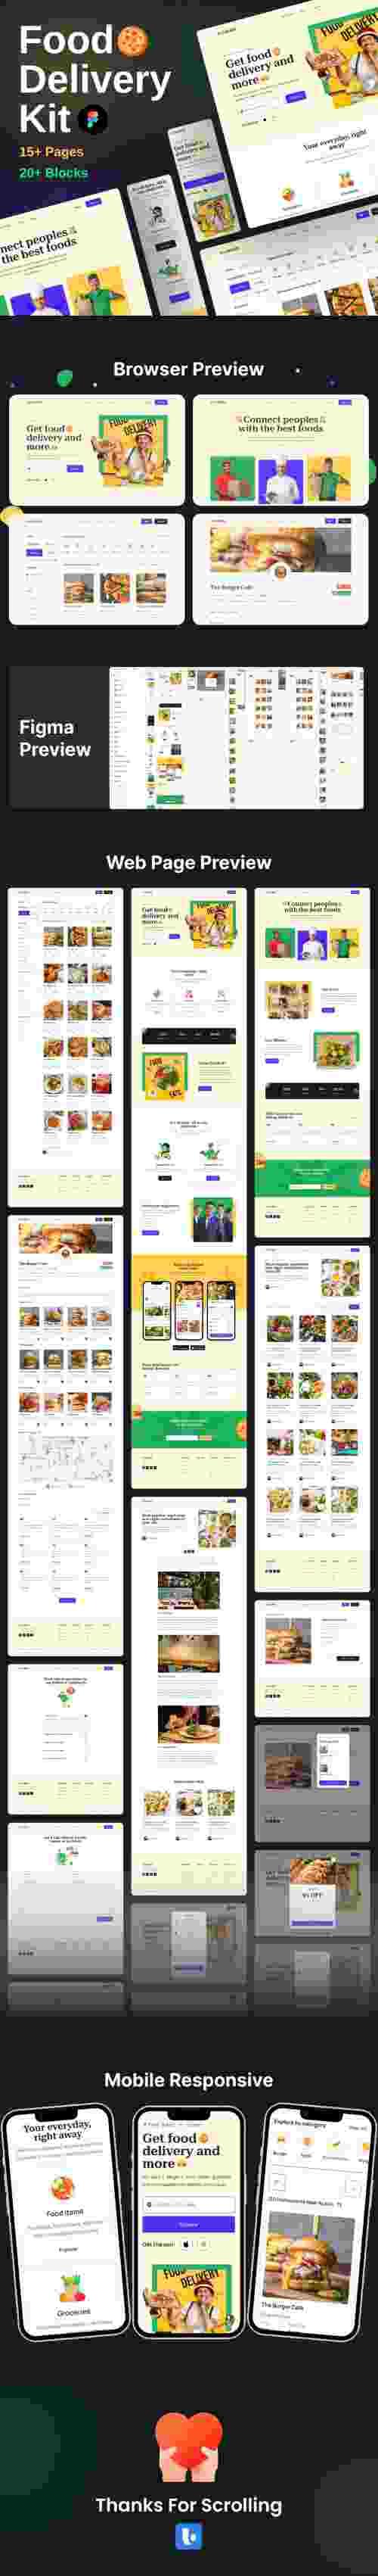 UIHut - Food Delivery Website Template - 24398